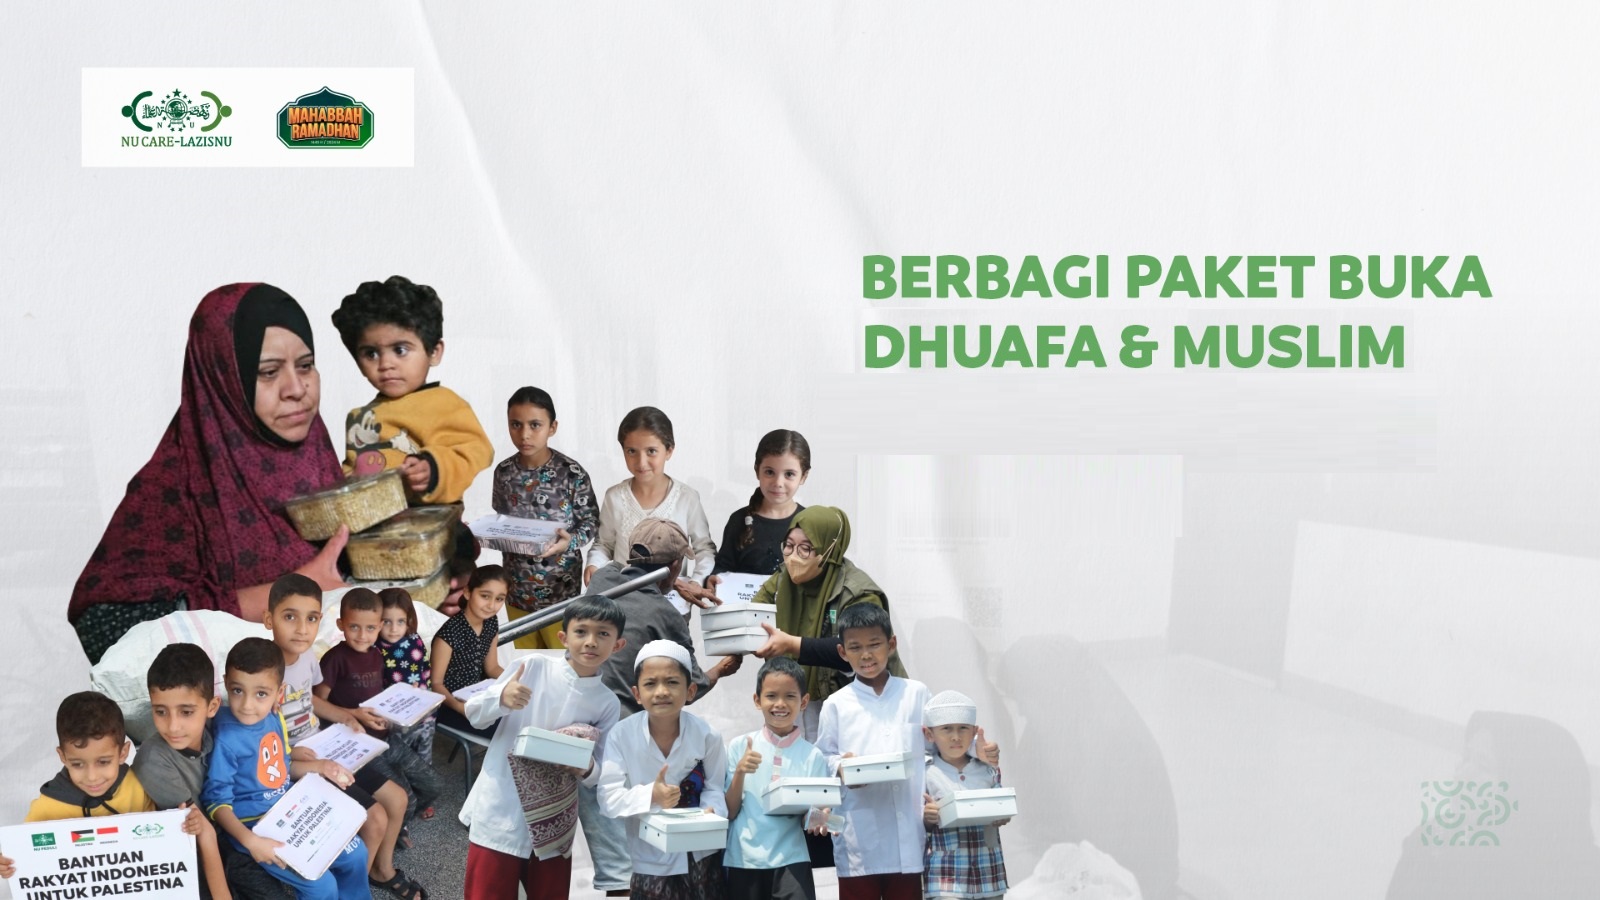 Berbagi Paket Buka Puasa Duafa & Muslim